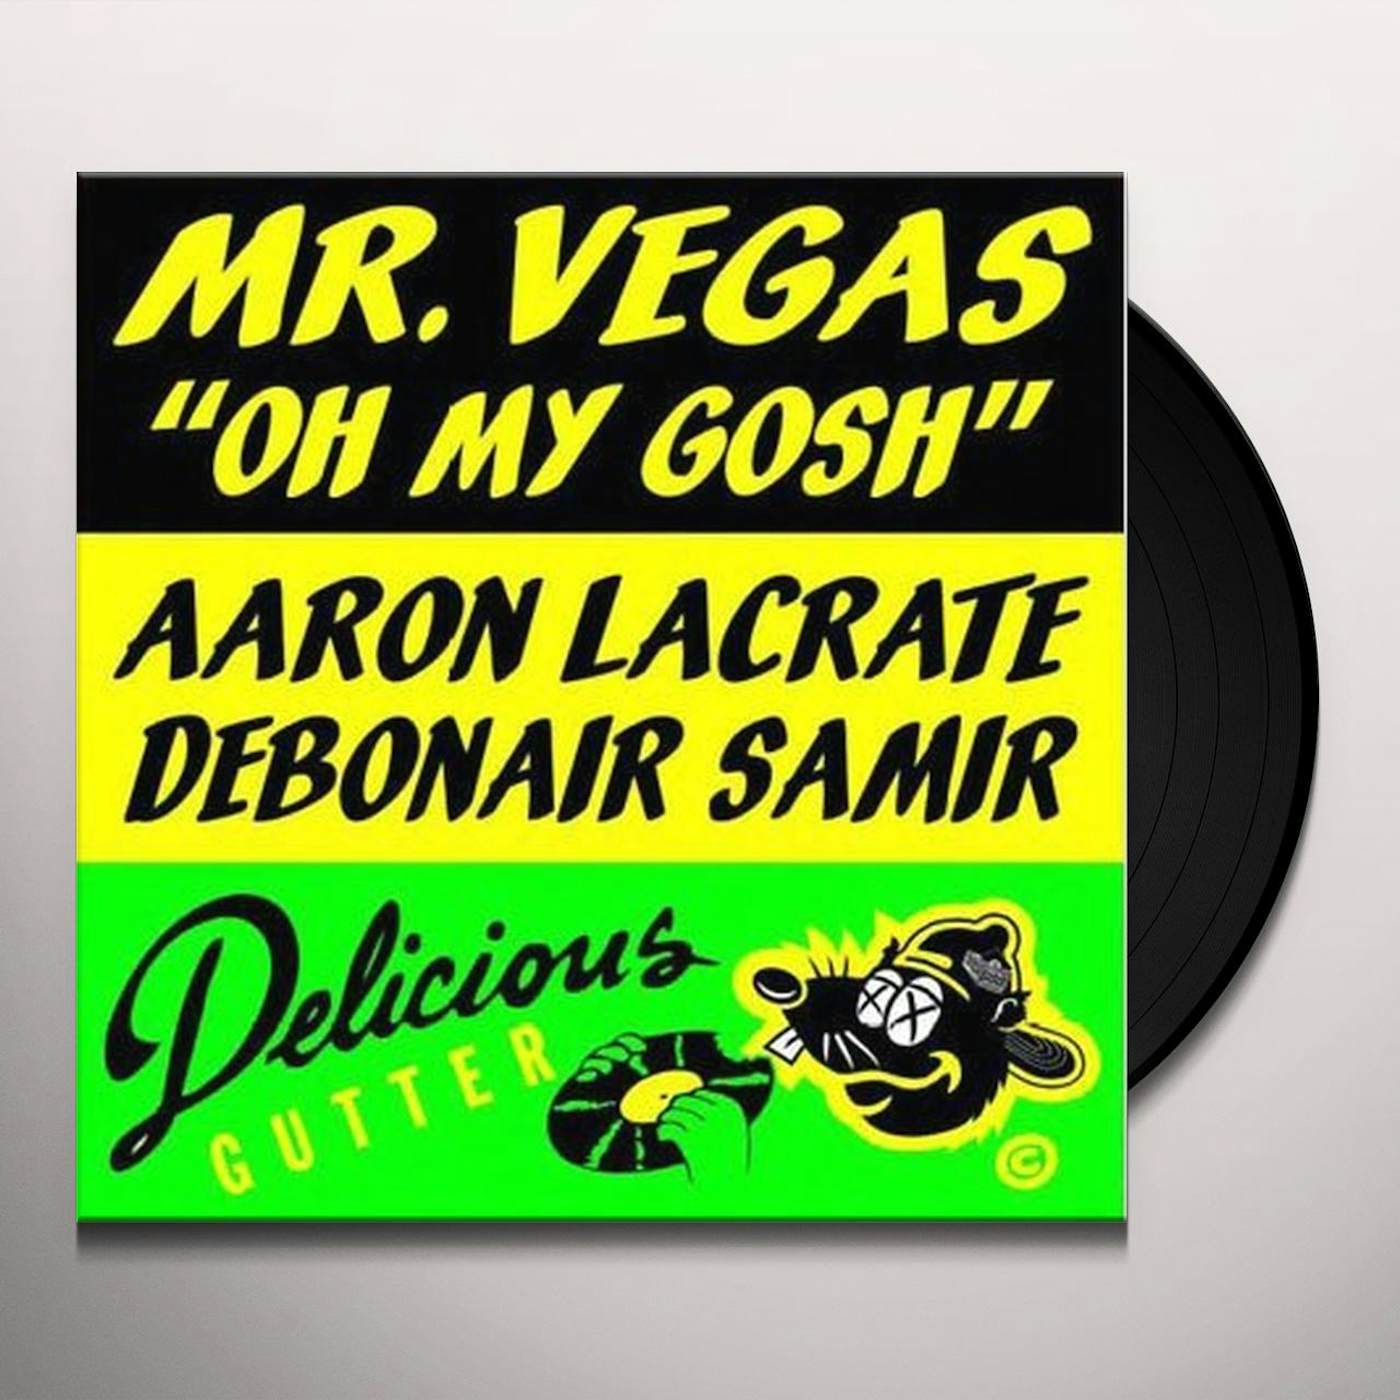 Mr. Vegas OH MY GOSH Vinyl Record